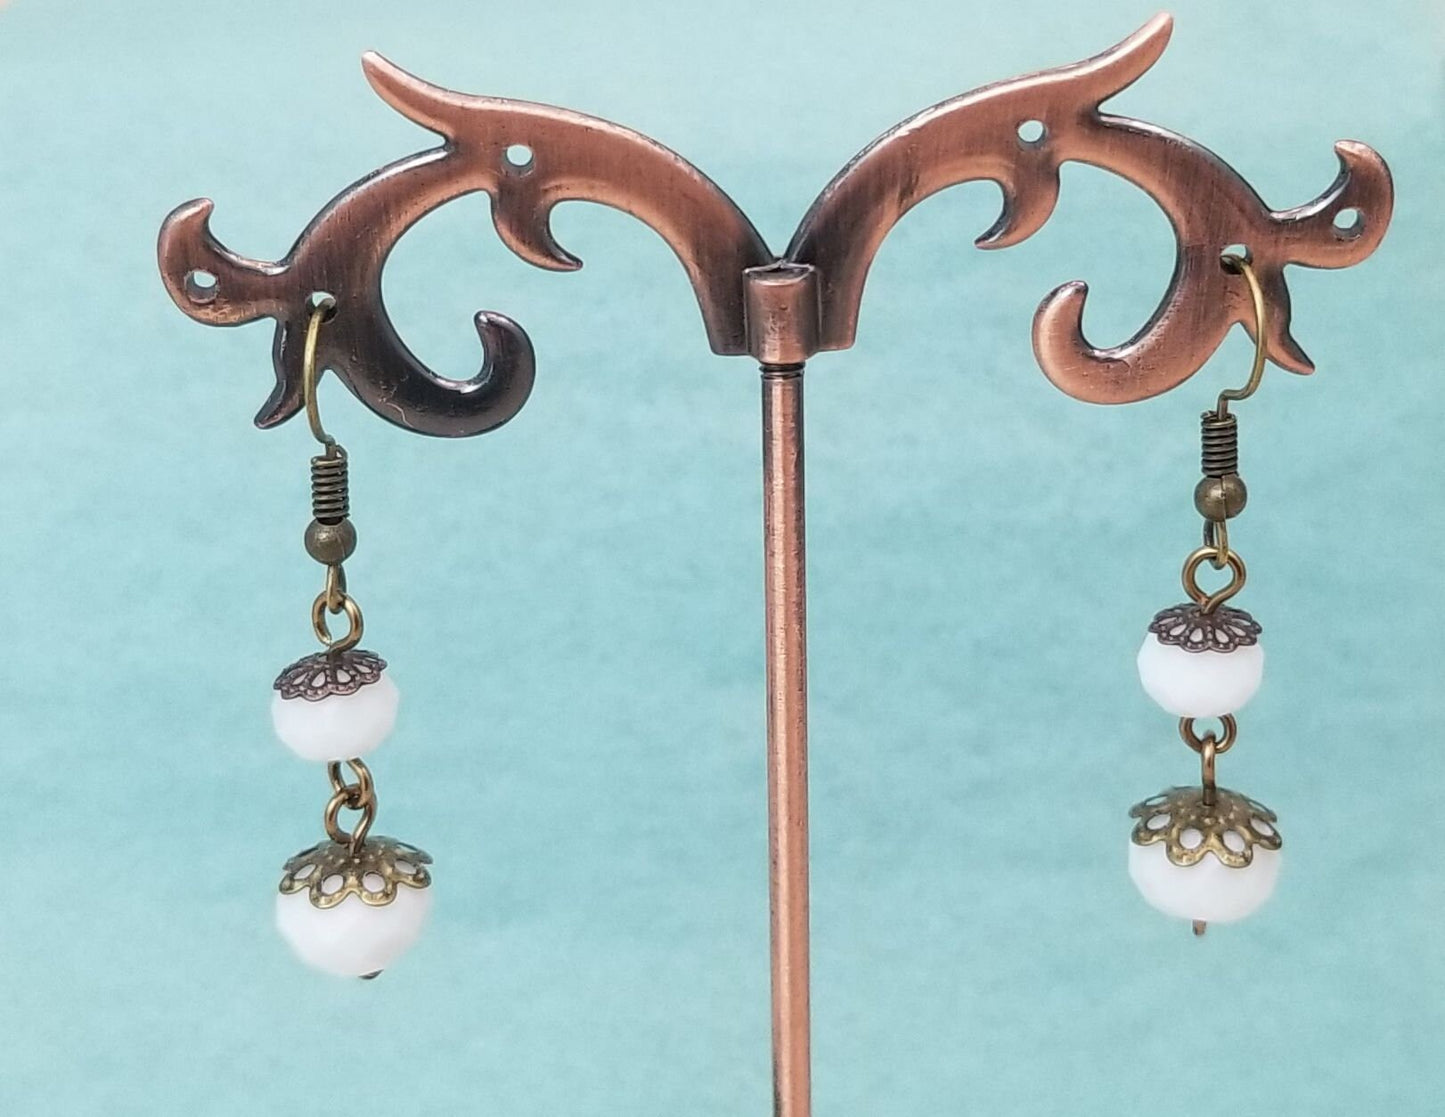 2-Tier Earrings in Opaque White, Wedding, Bridesmaid, Art Nouveau, Belle Époque, Renaissance, Garden, Choice of Metals and Closure Types